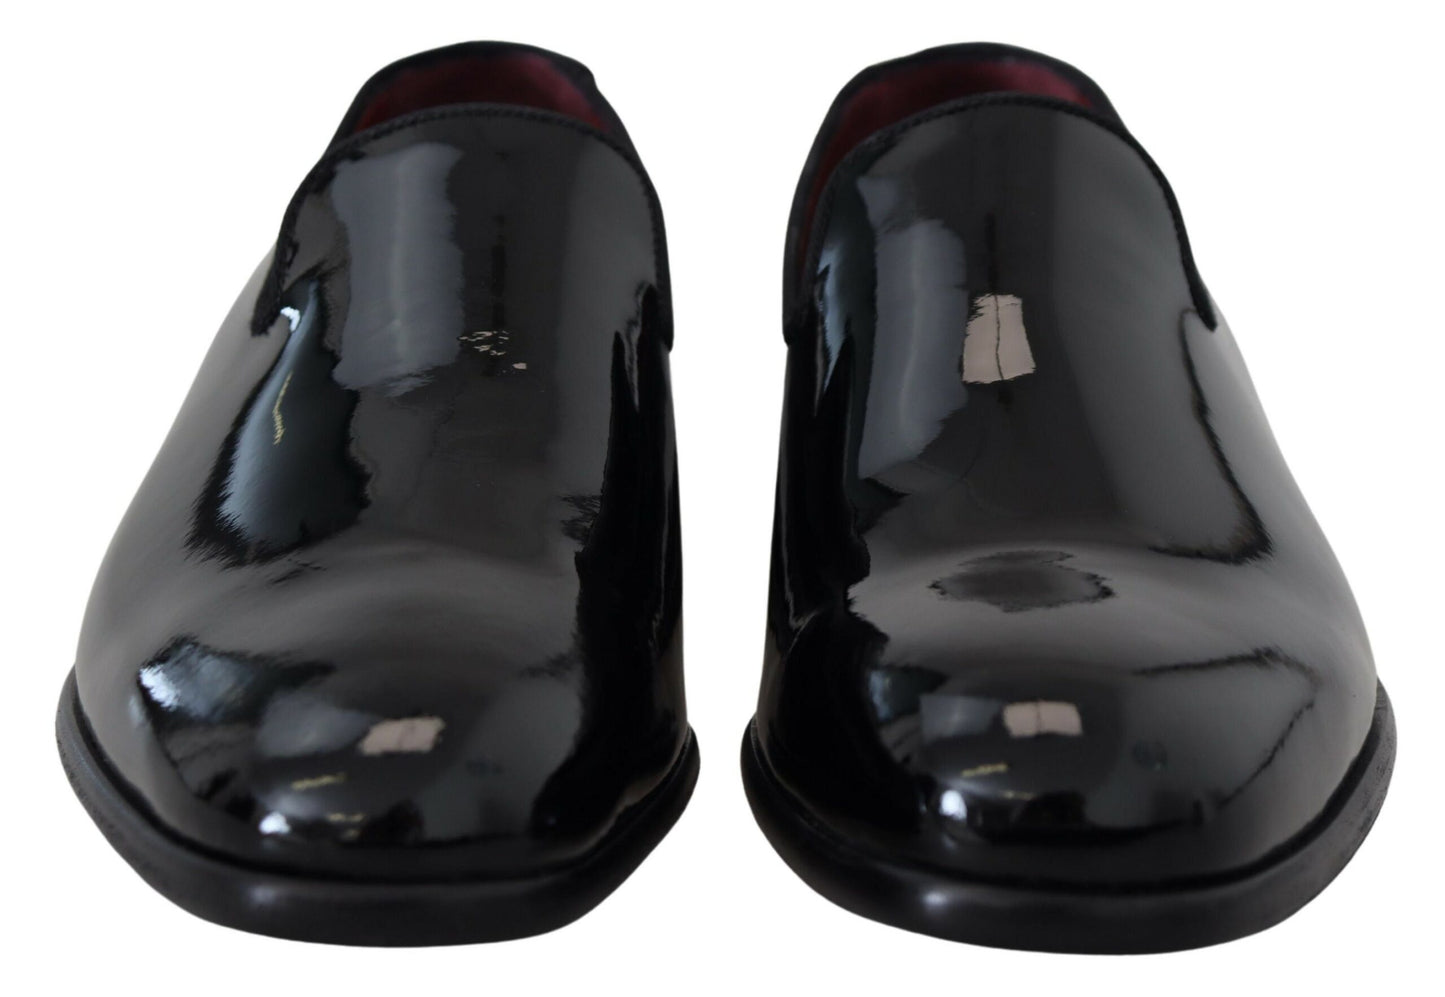 Dolce & Gabbana Sleek Black Patent Loafers